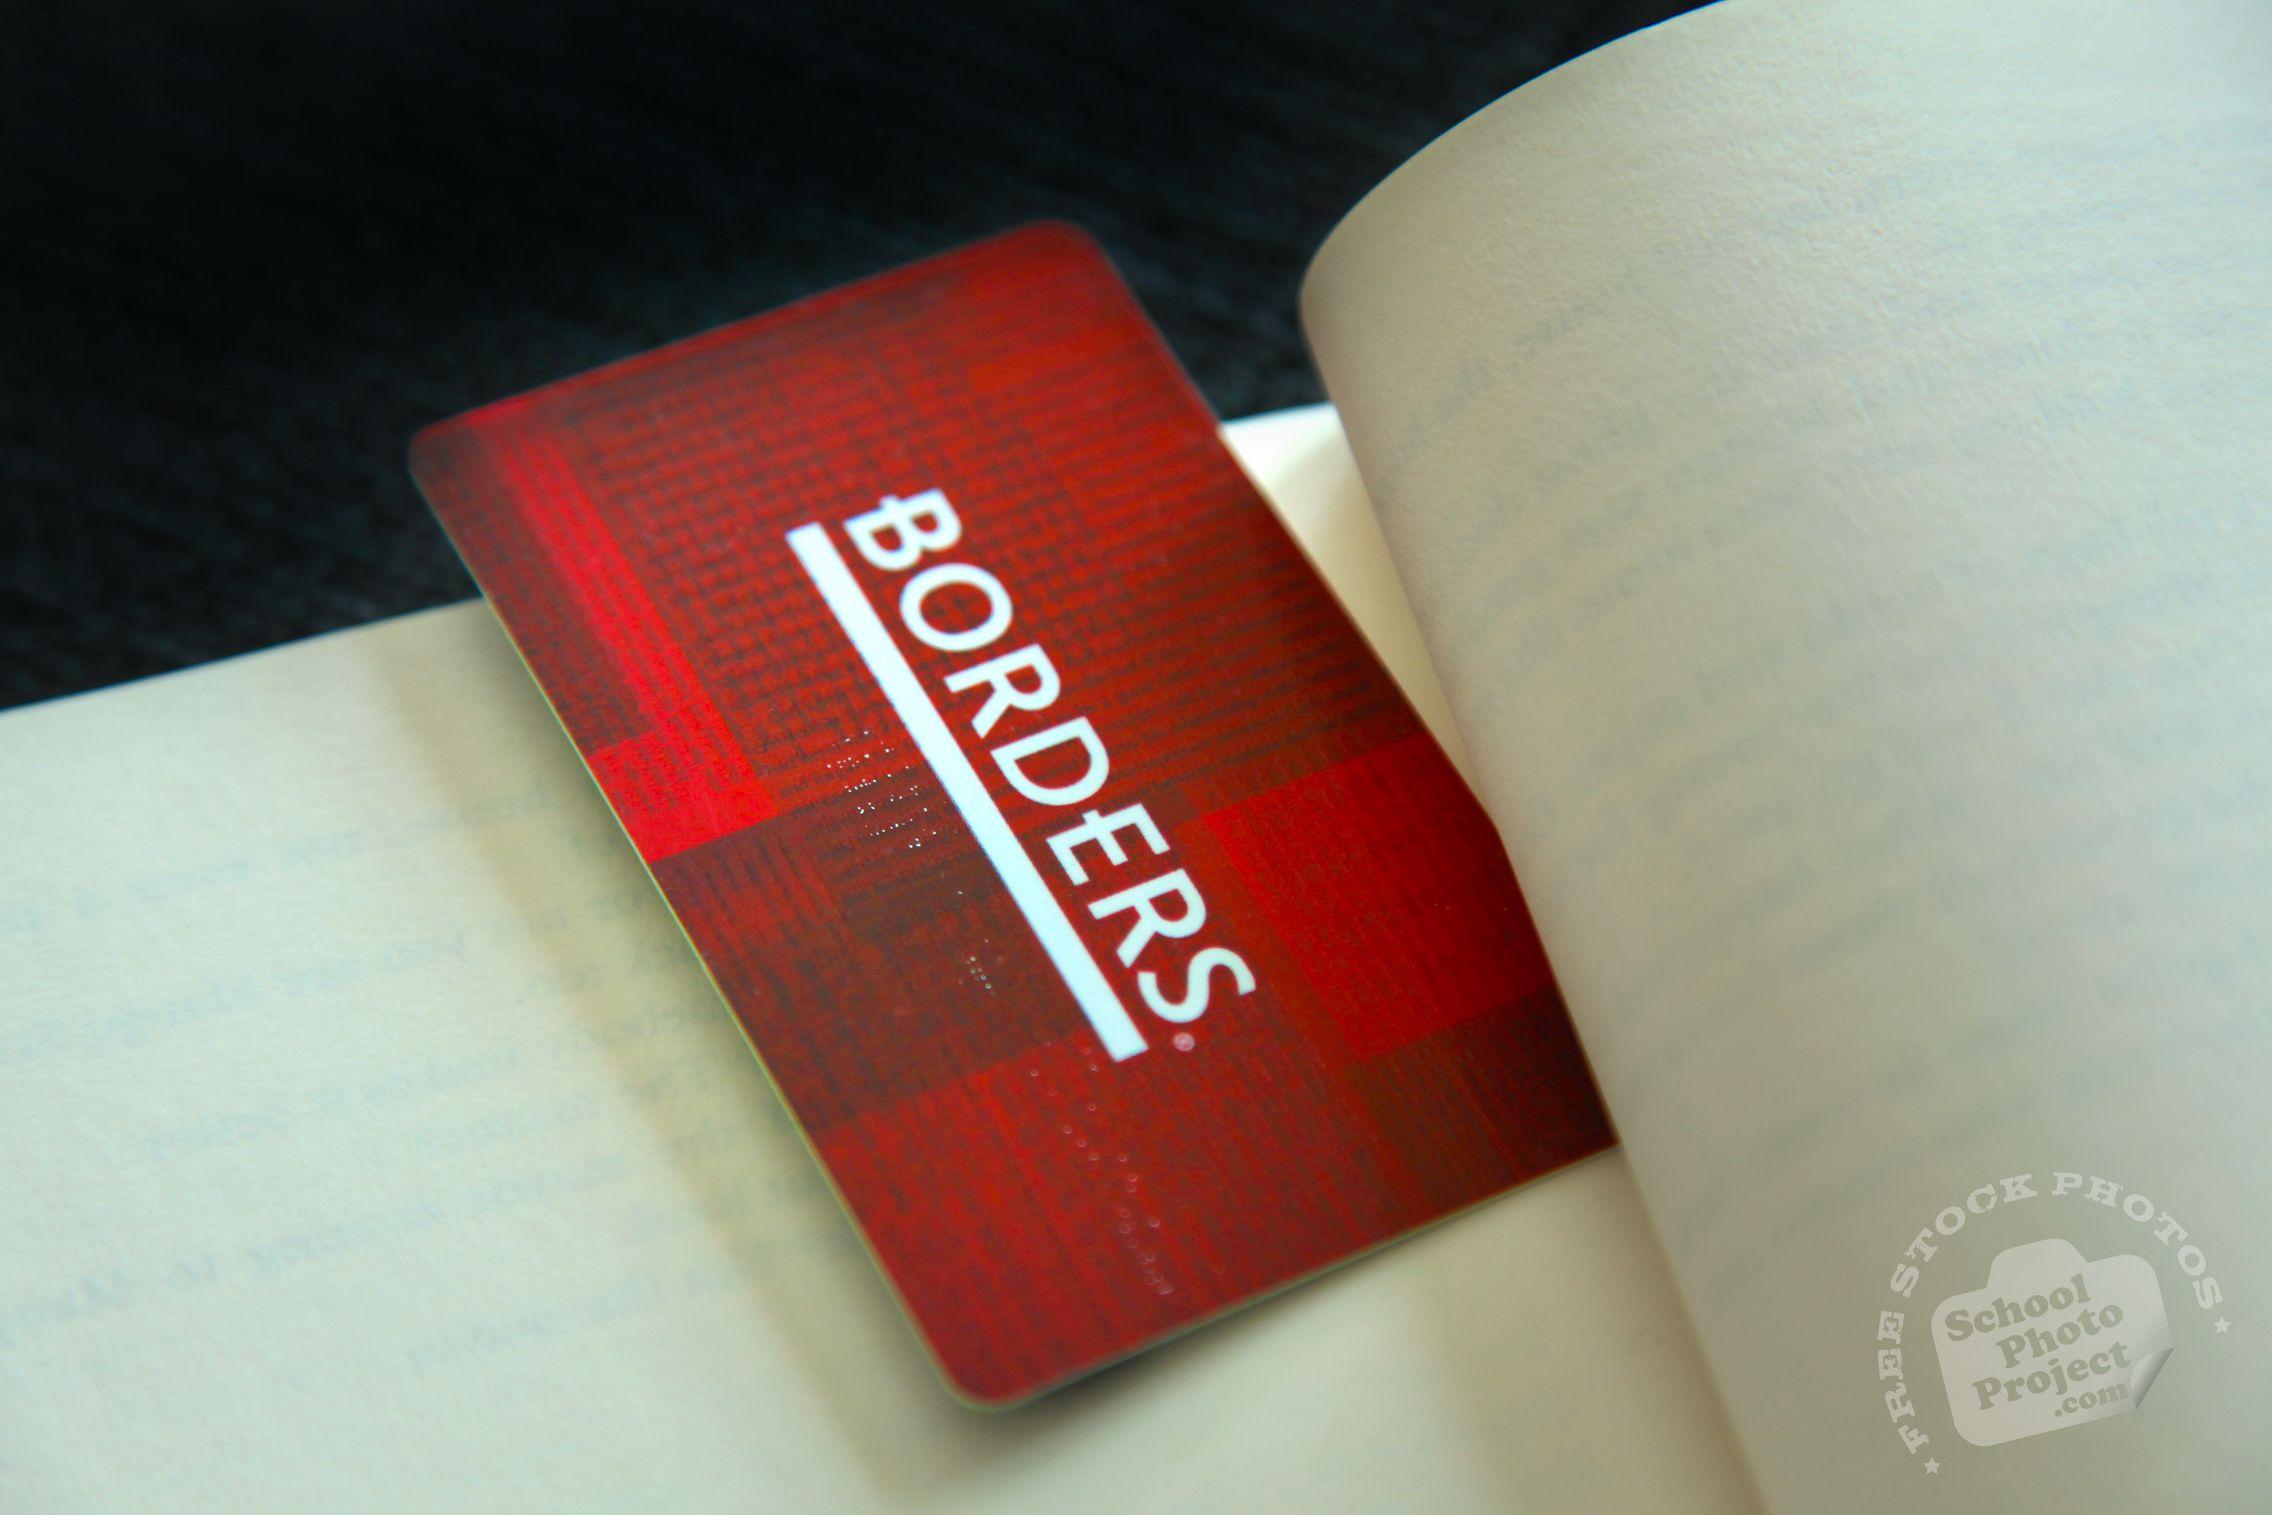 Borders Bookstore Logo - Borders Logo, FREE Stock Photo, Image, Picture: Borders Logo on Gift ...